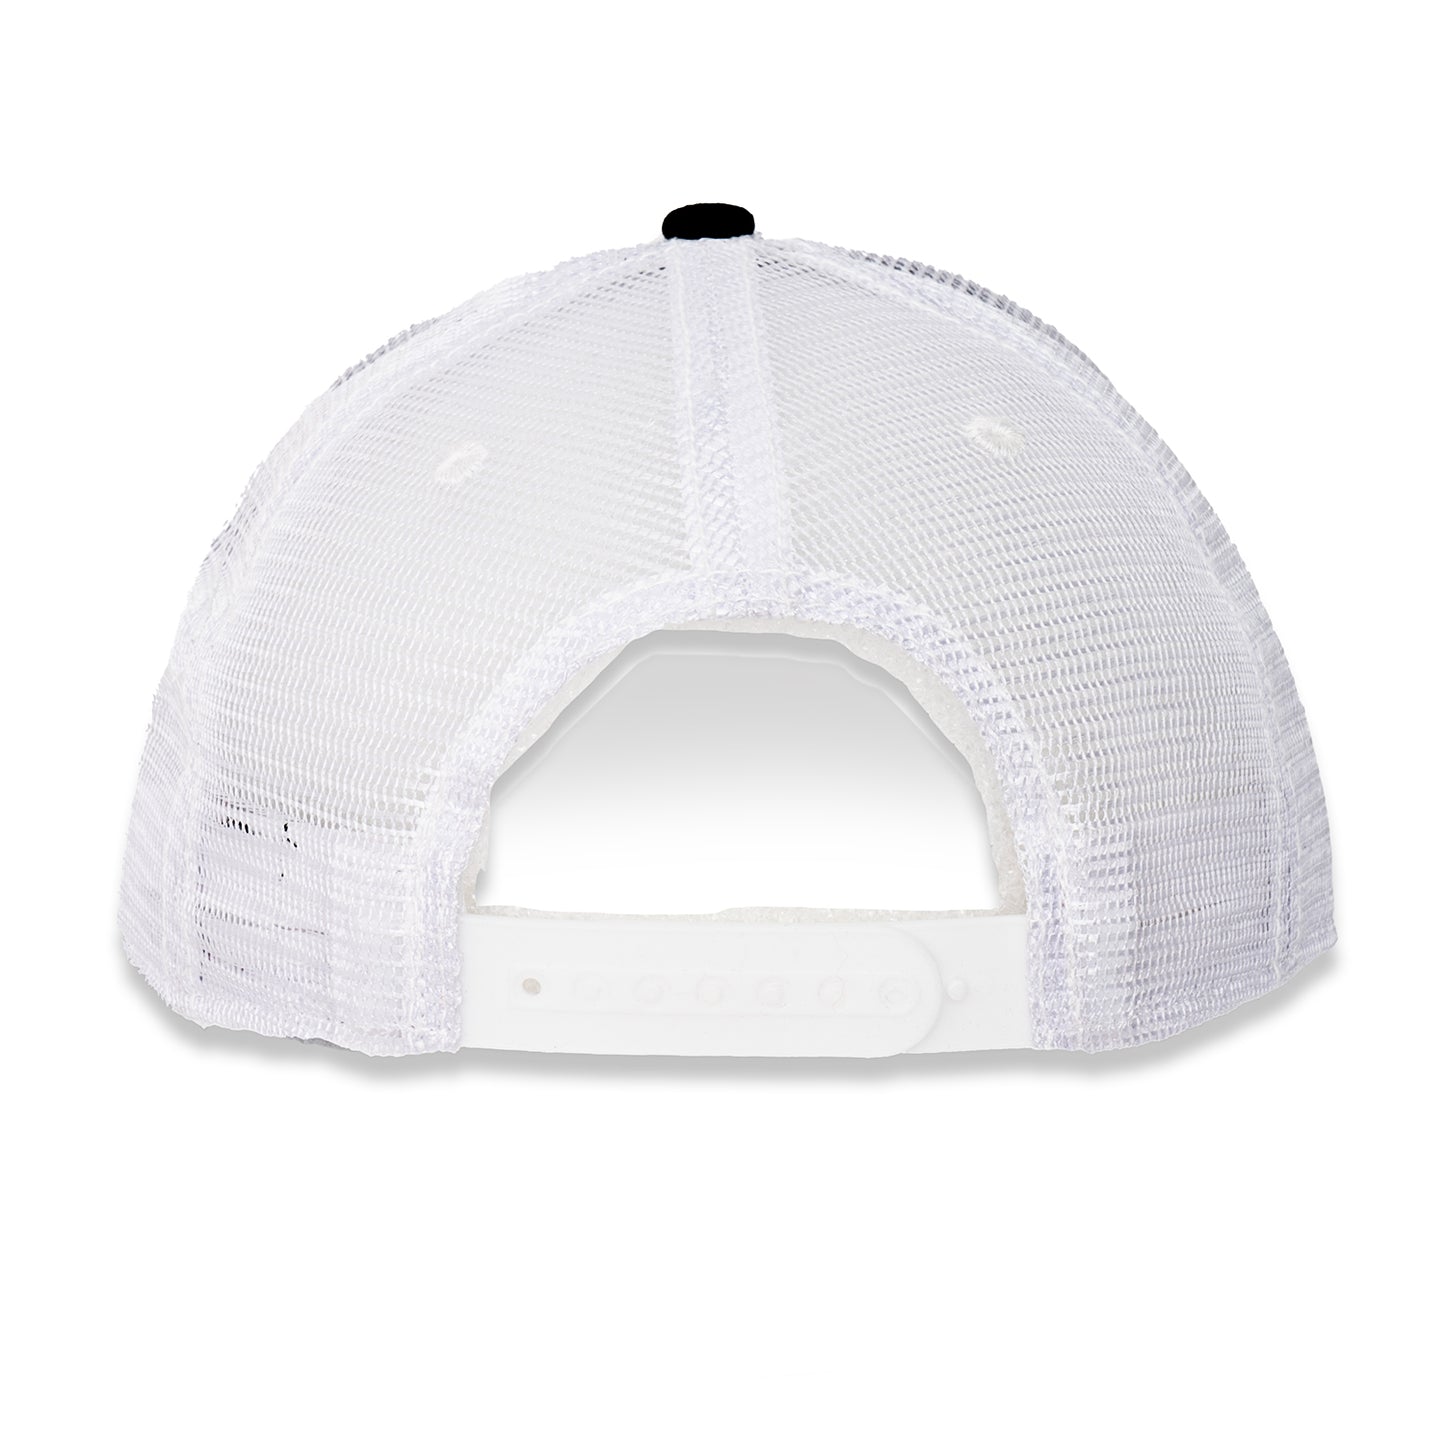 IMSA Flatbill Snapback Hat - Black/Red/White